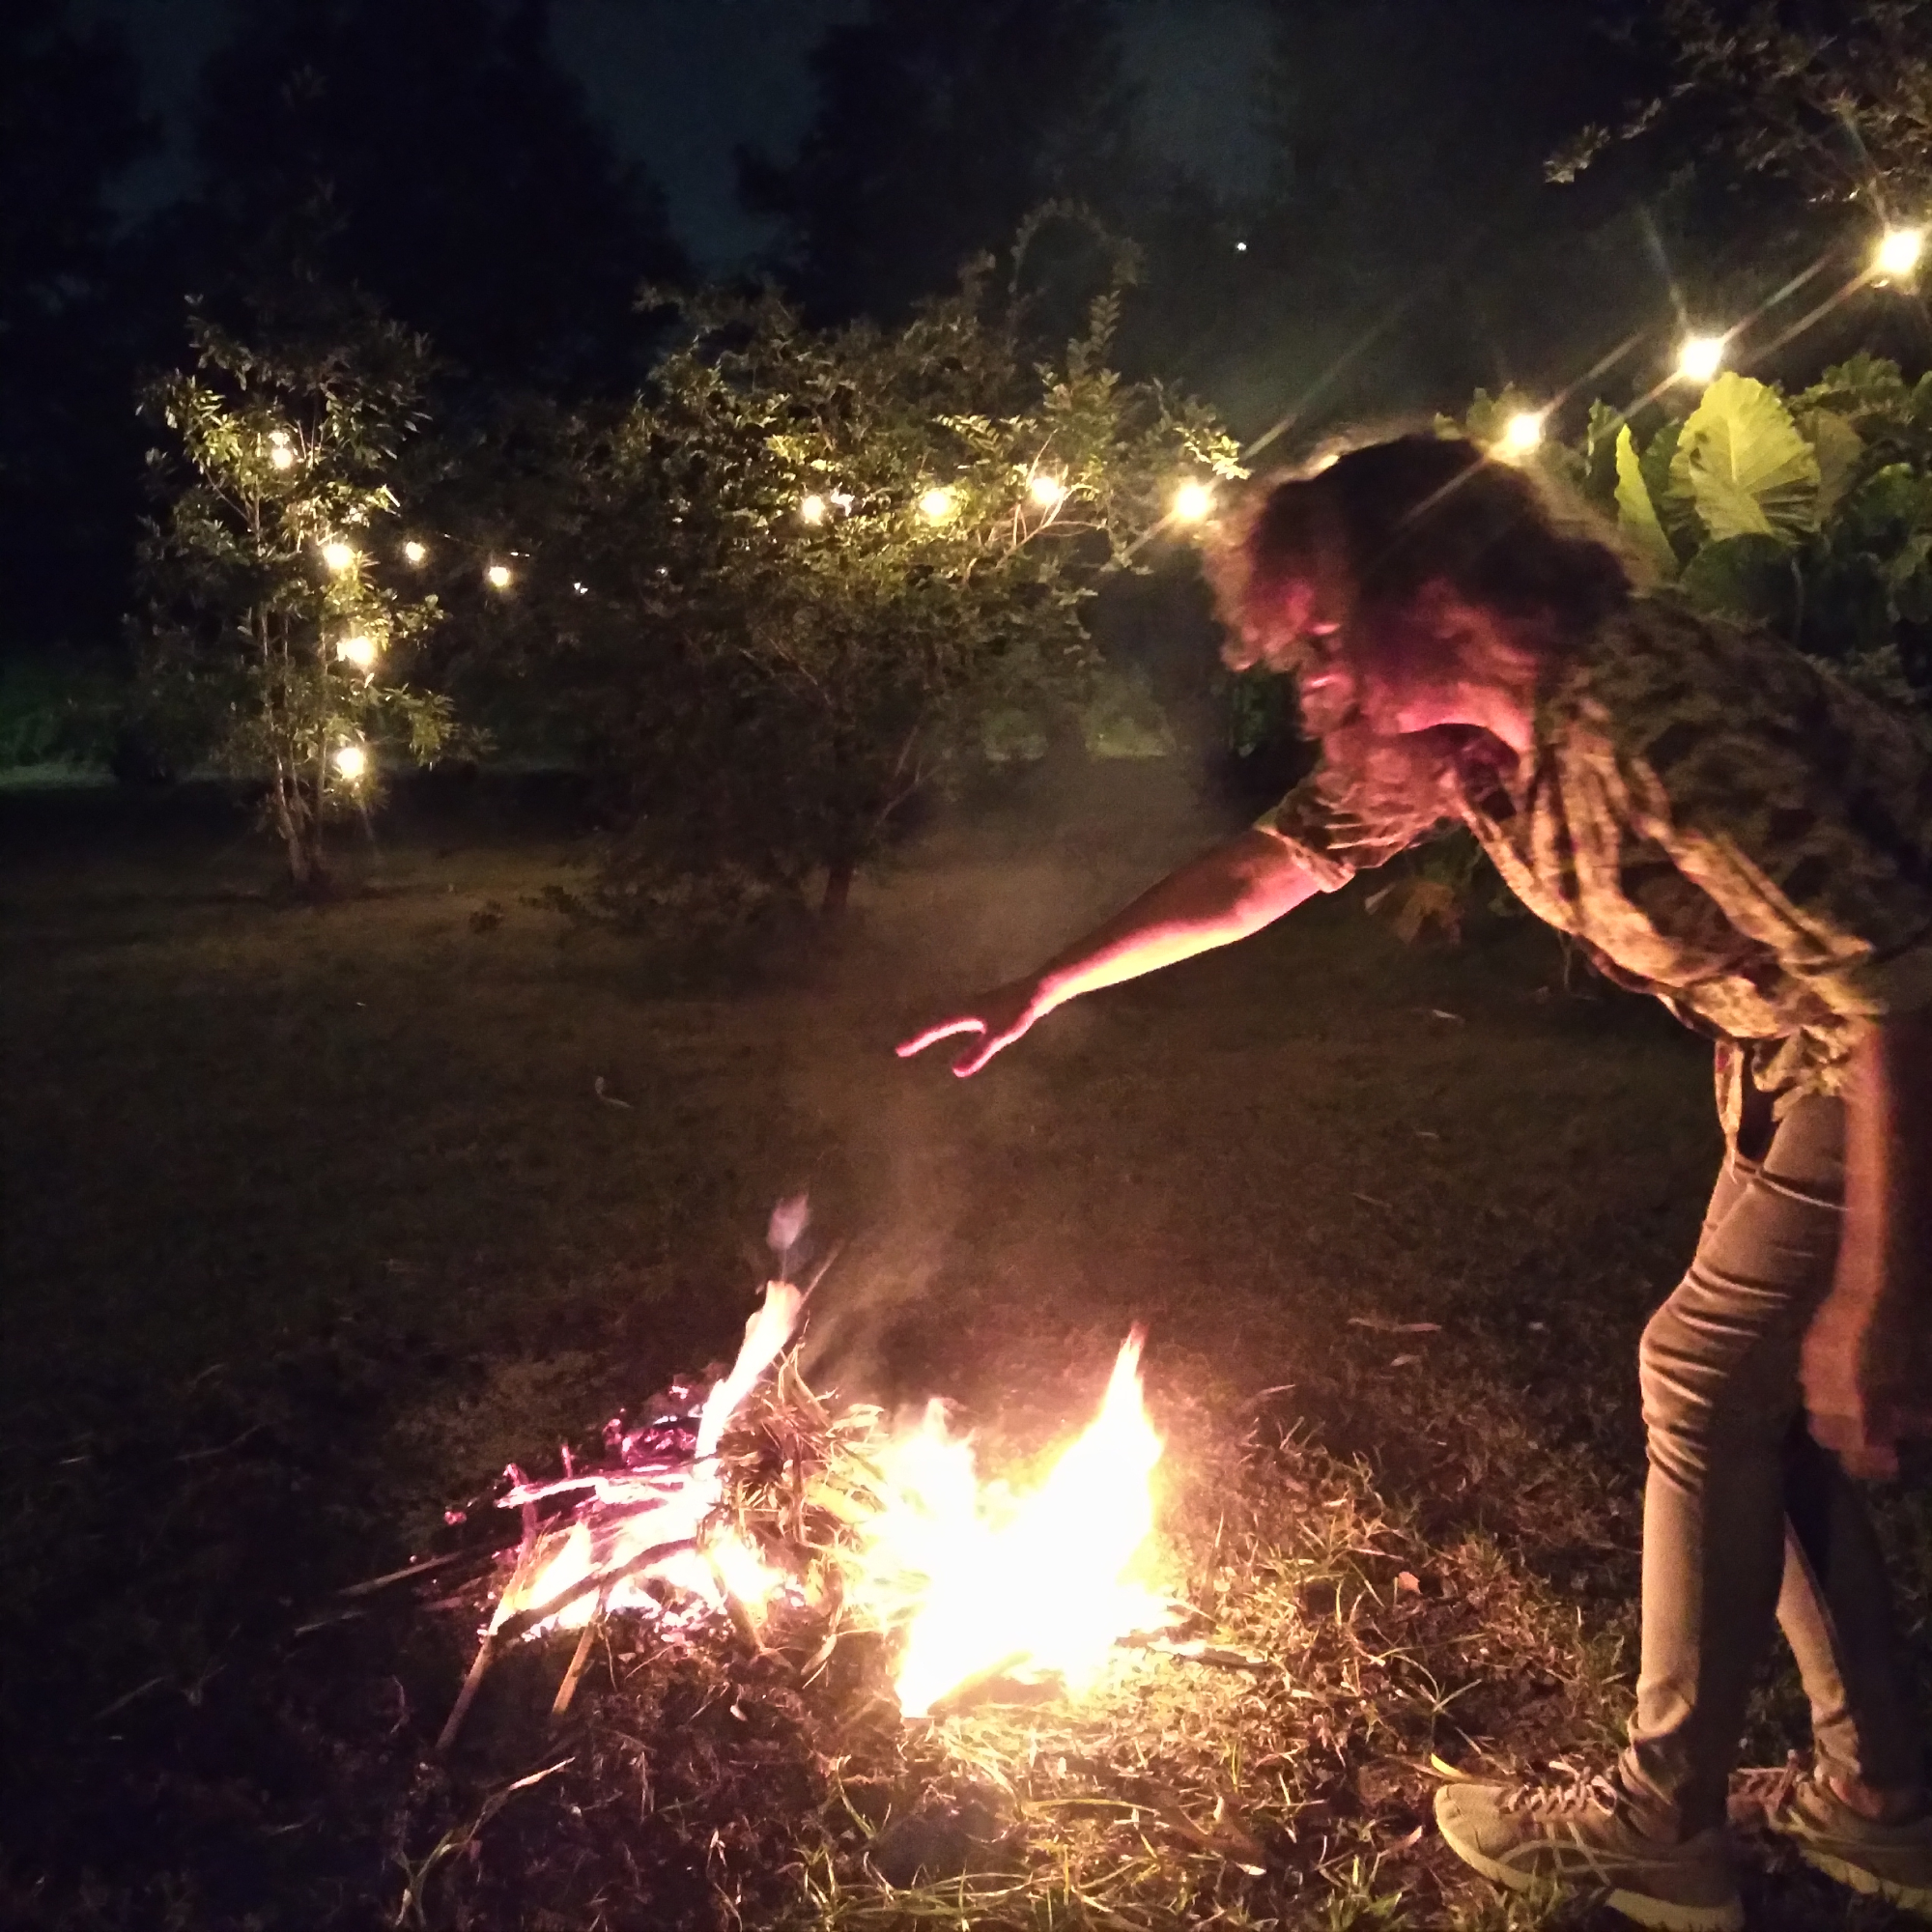  Gina adding fuel to the bonfire.